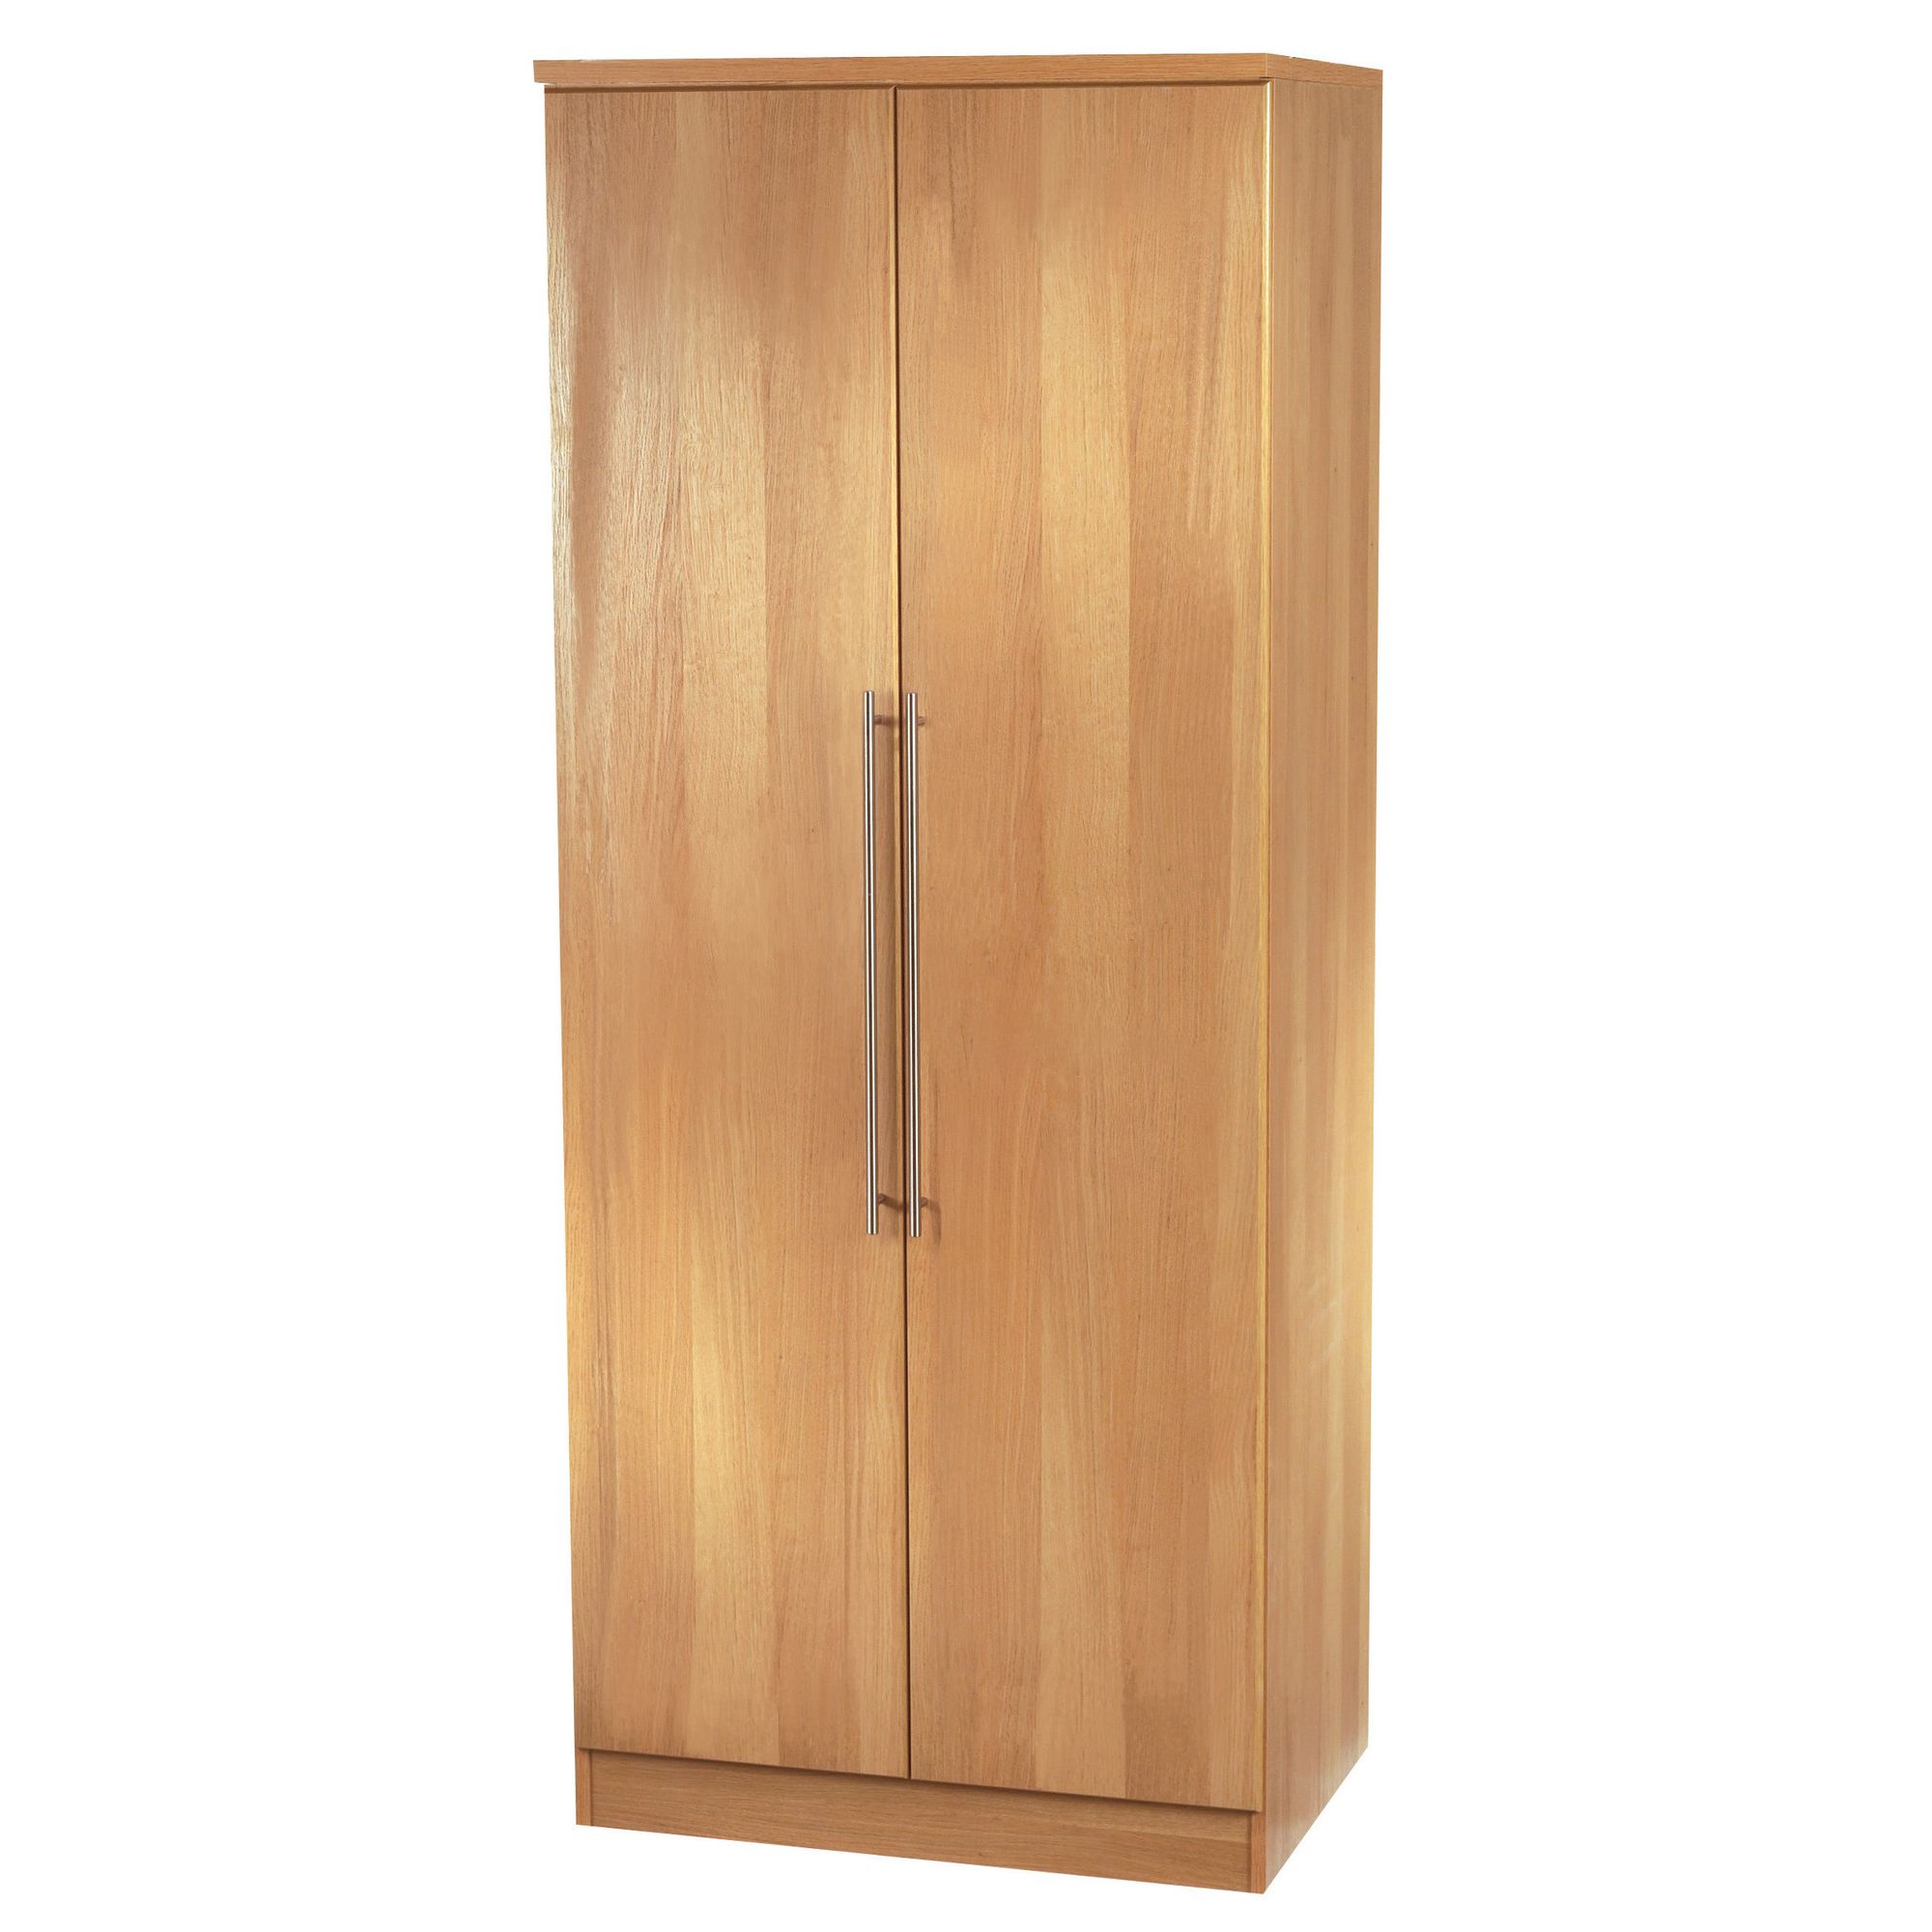 Welcome Furniture Sherwood 76.2 cm Plain Midi Wardrobe - Walnut at Tesco Direct